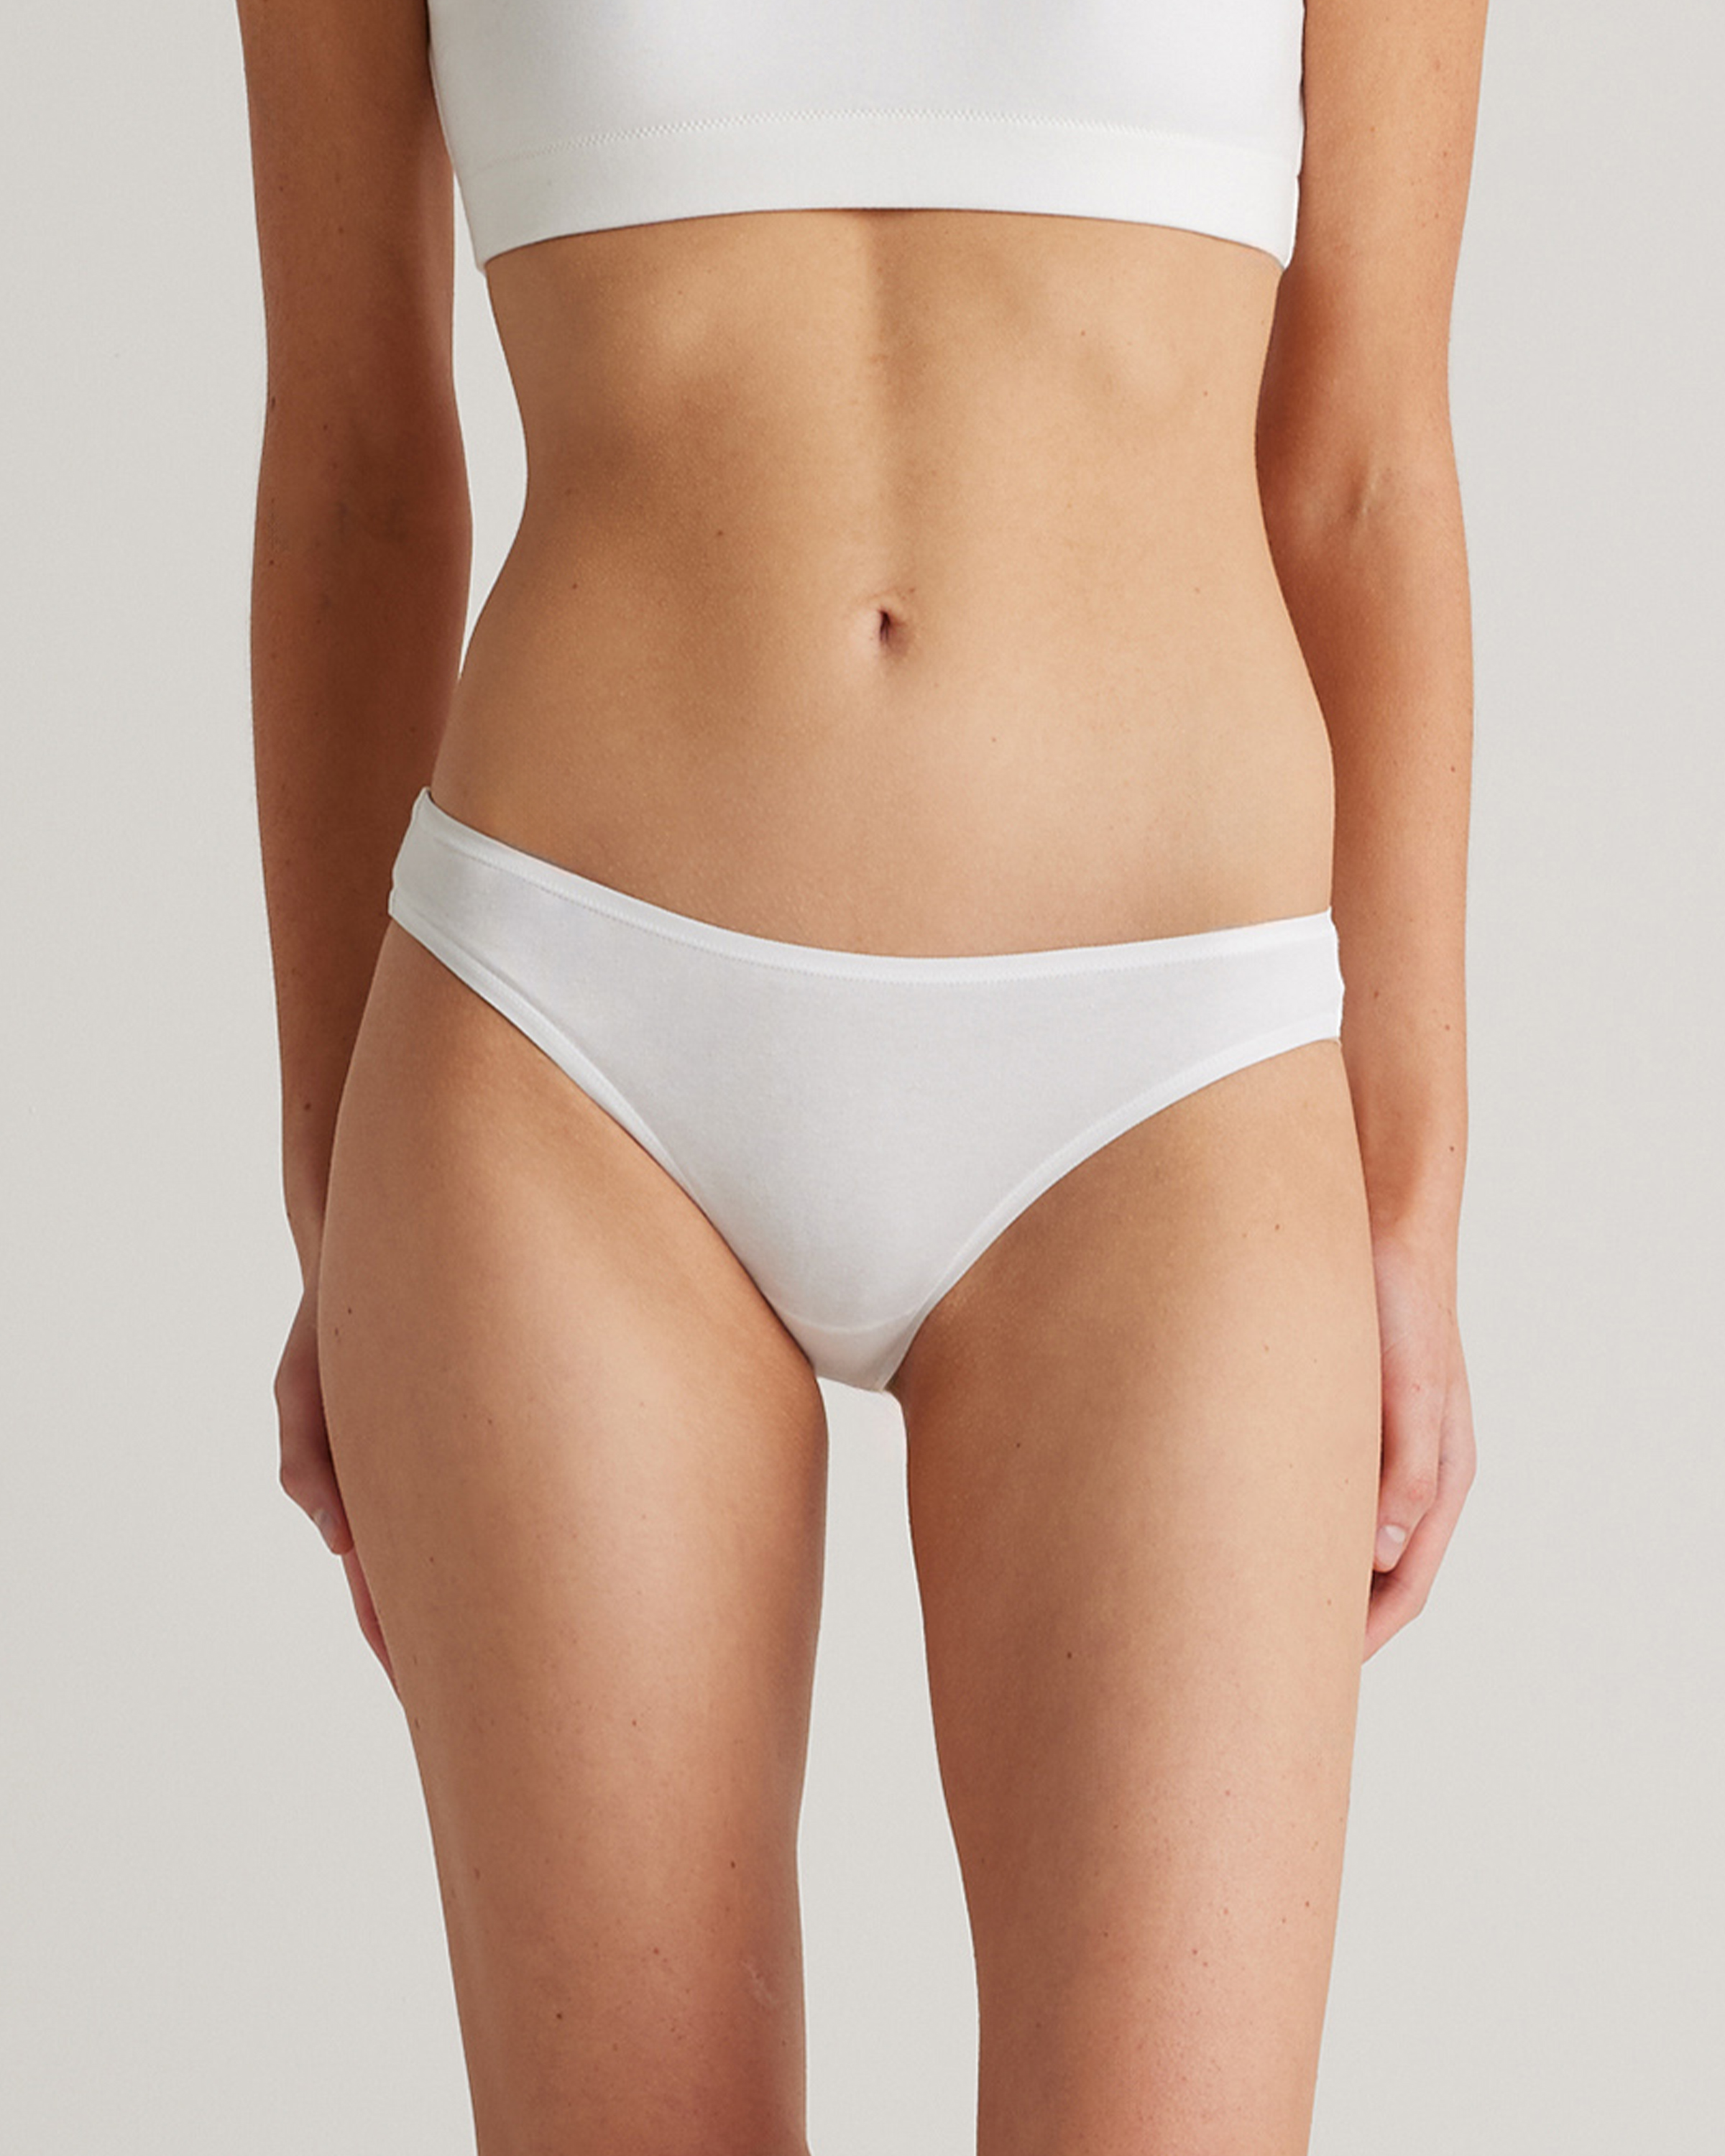 6-12 Teen Girl Bikini cheeky Sport 95% Cotton Underwear Panties